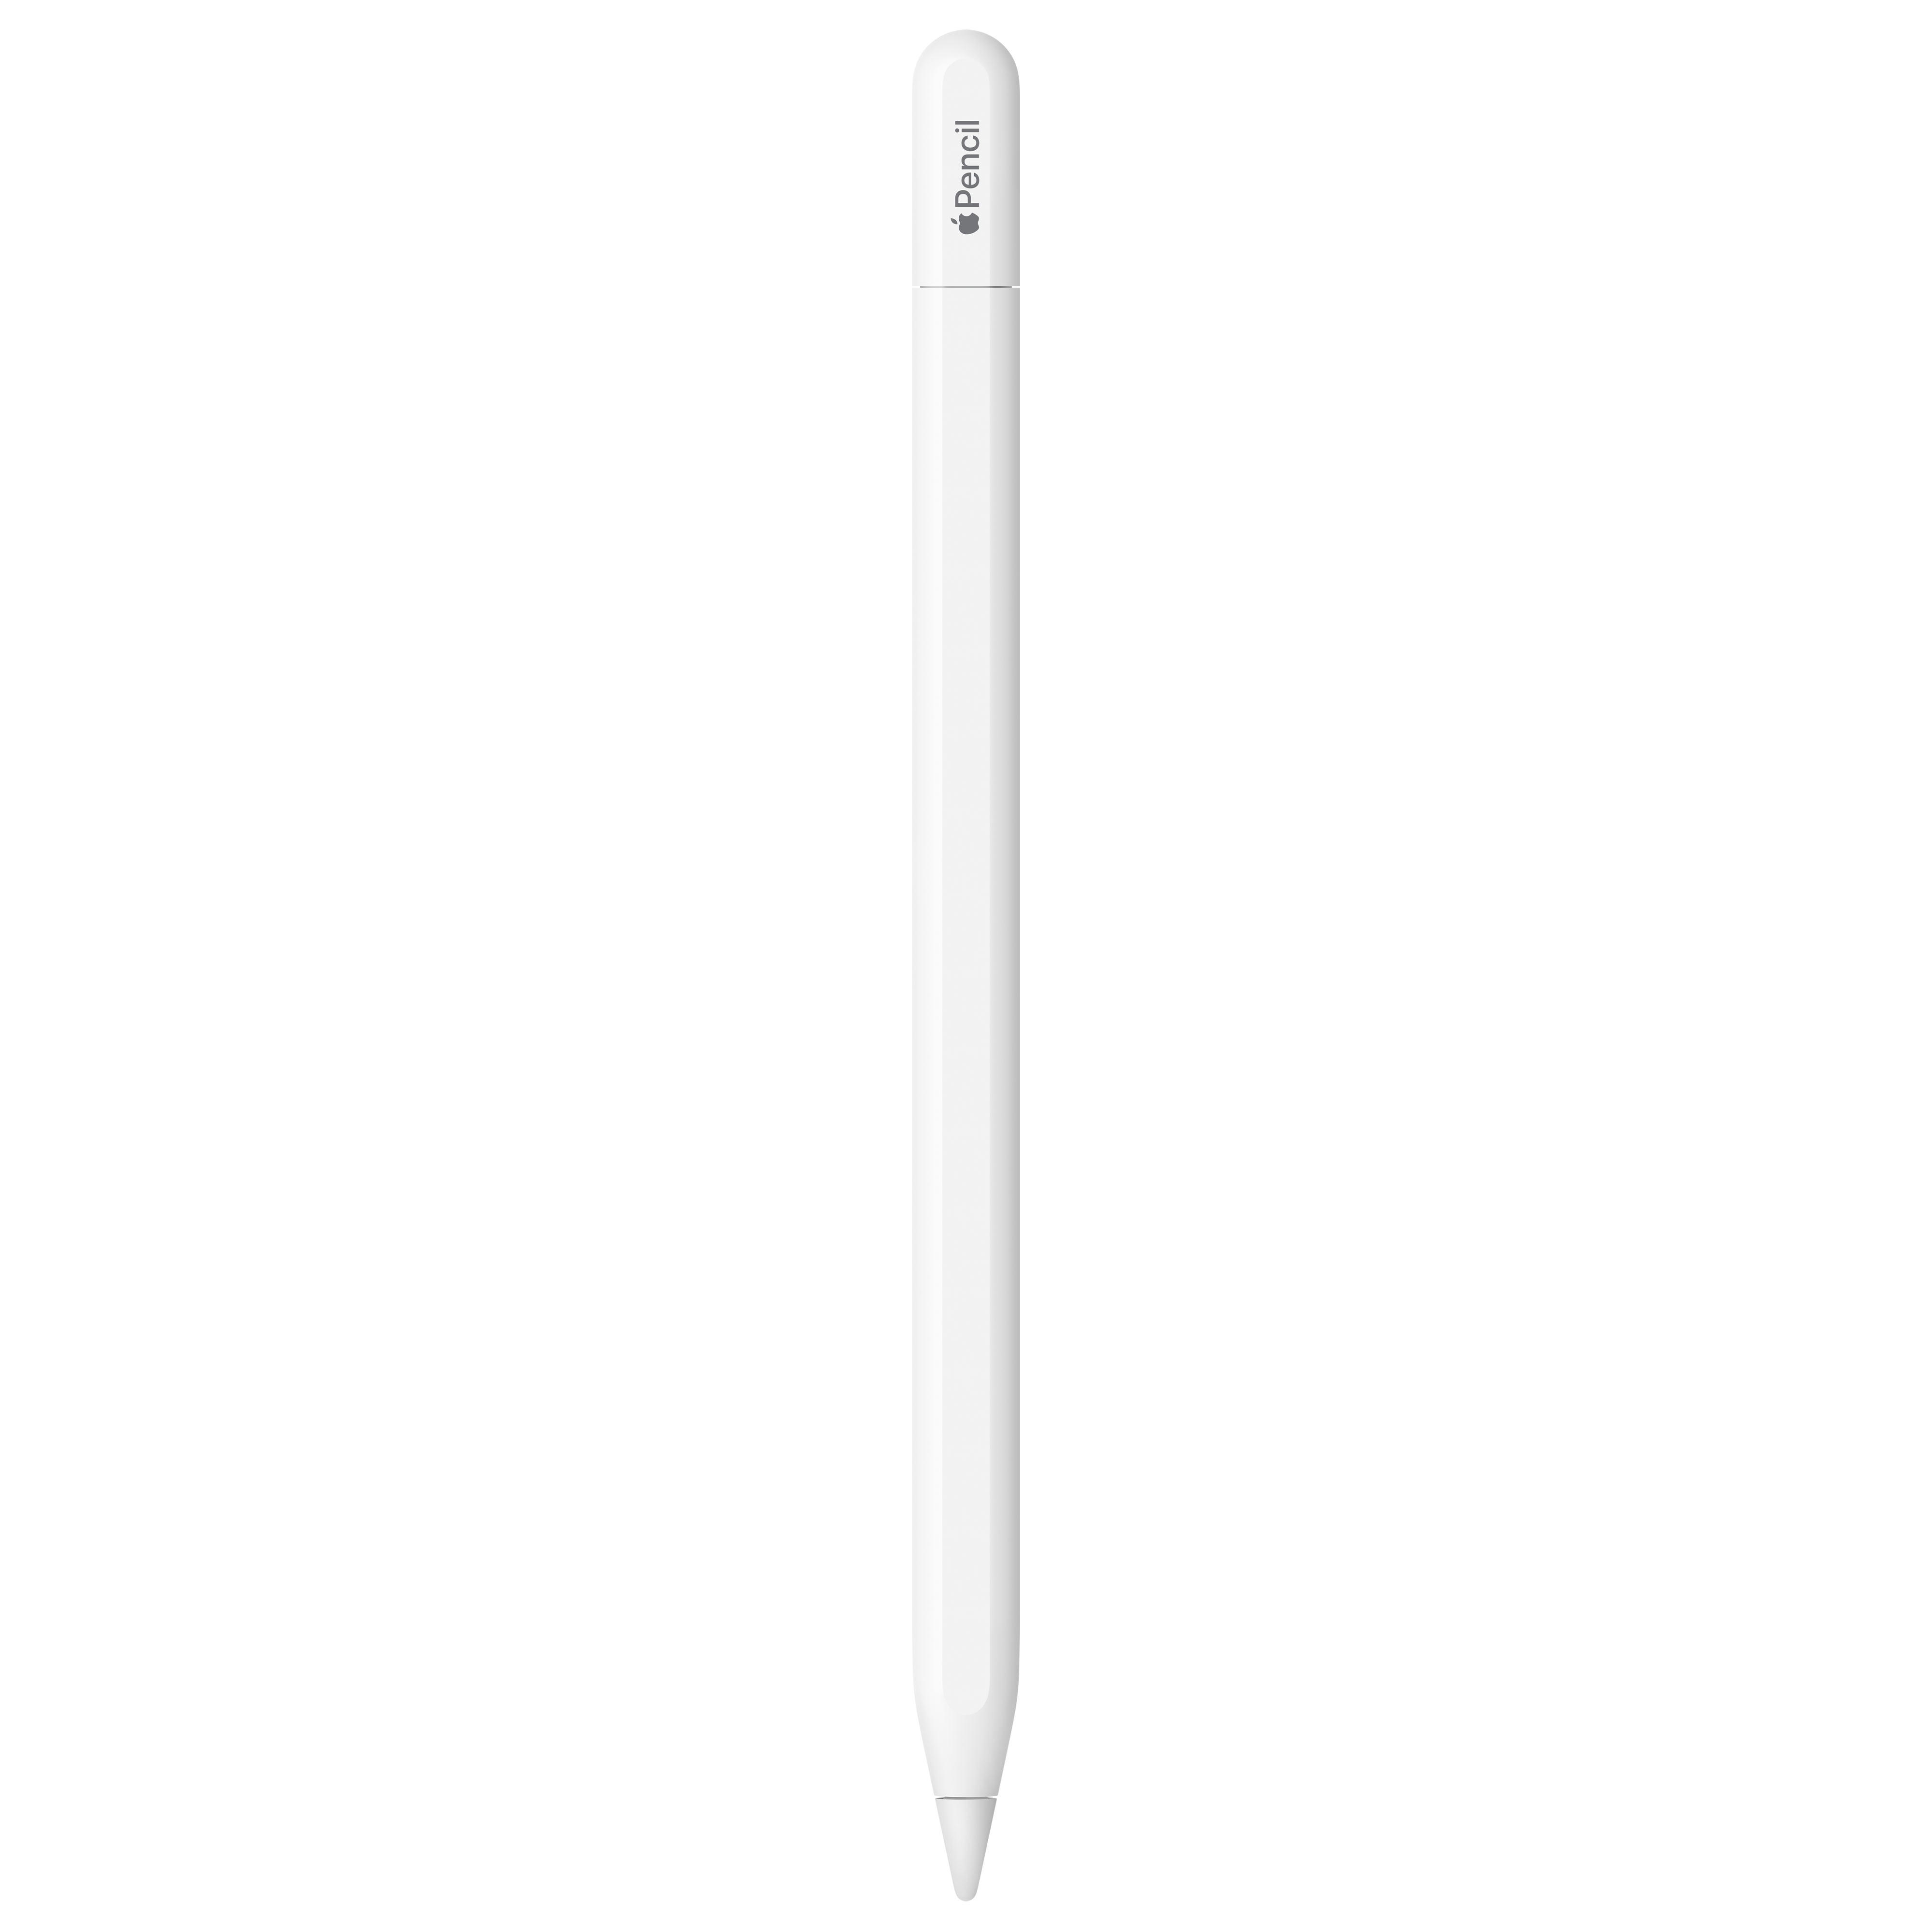 File:Apple Pencil 1 2019-01-27 (cropped).jpg - Wikipedia